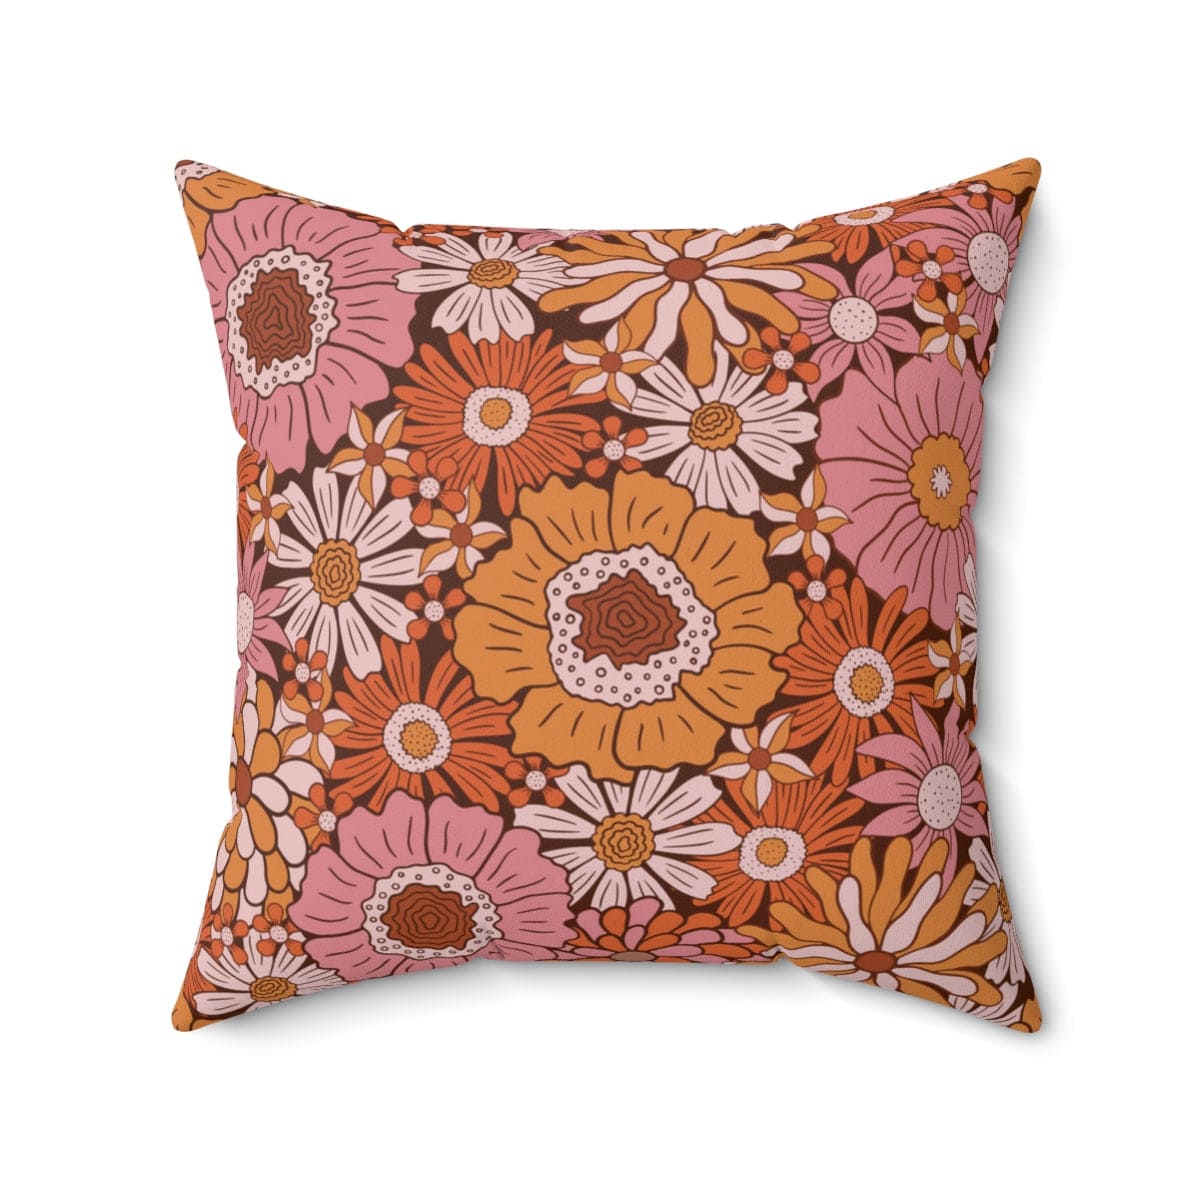 Kate McEnroe New York Mid Century Modern Groovy Floral Pillow Home Decor 20" × 20" 12138627374111050342